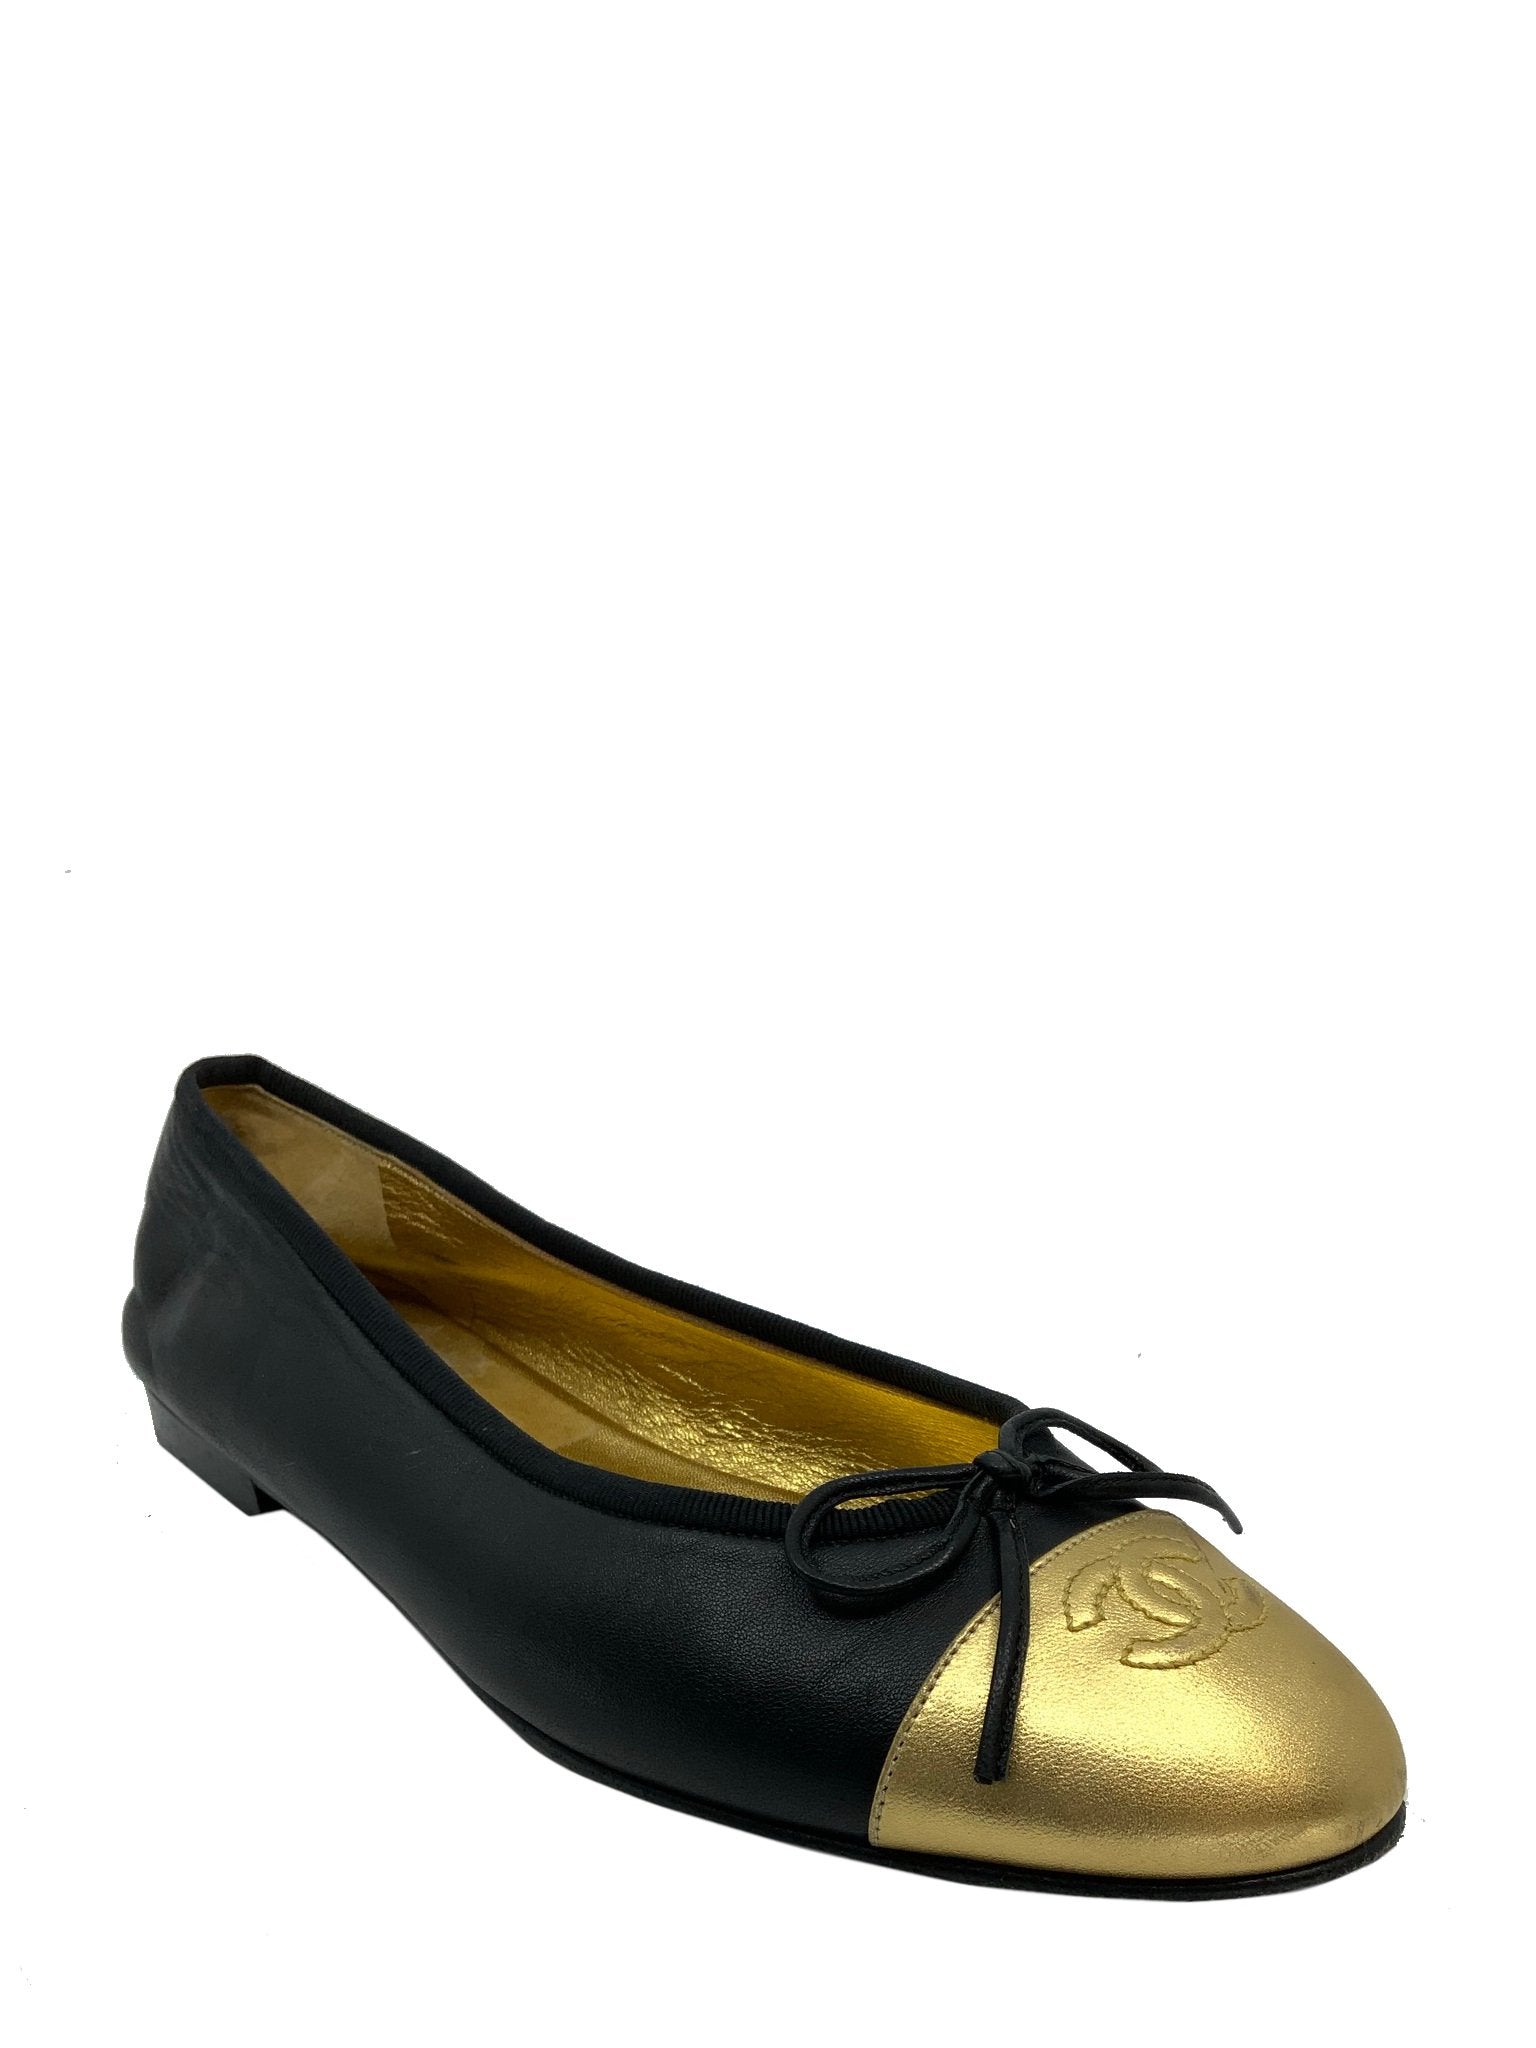 CHANEL Cap Toe Leather Ballet Ballerina Black Flats Shoe Women's EUR 39 /  US 8.5